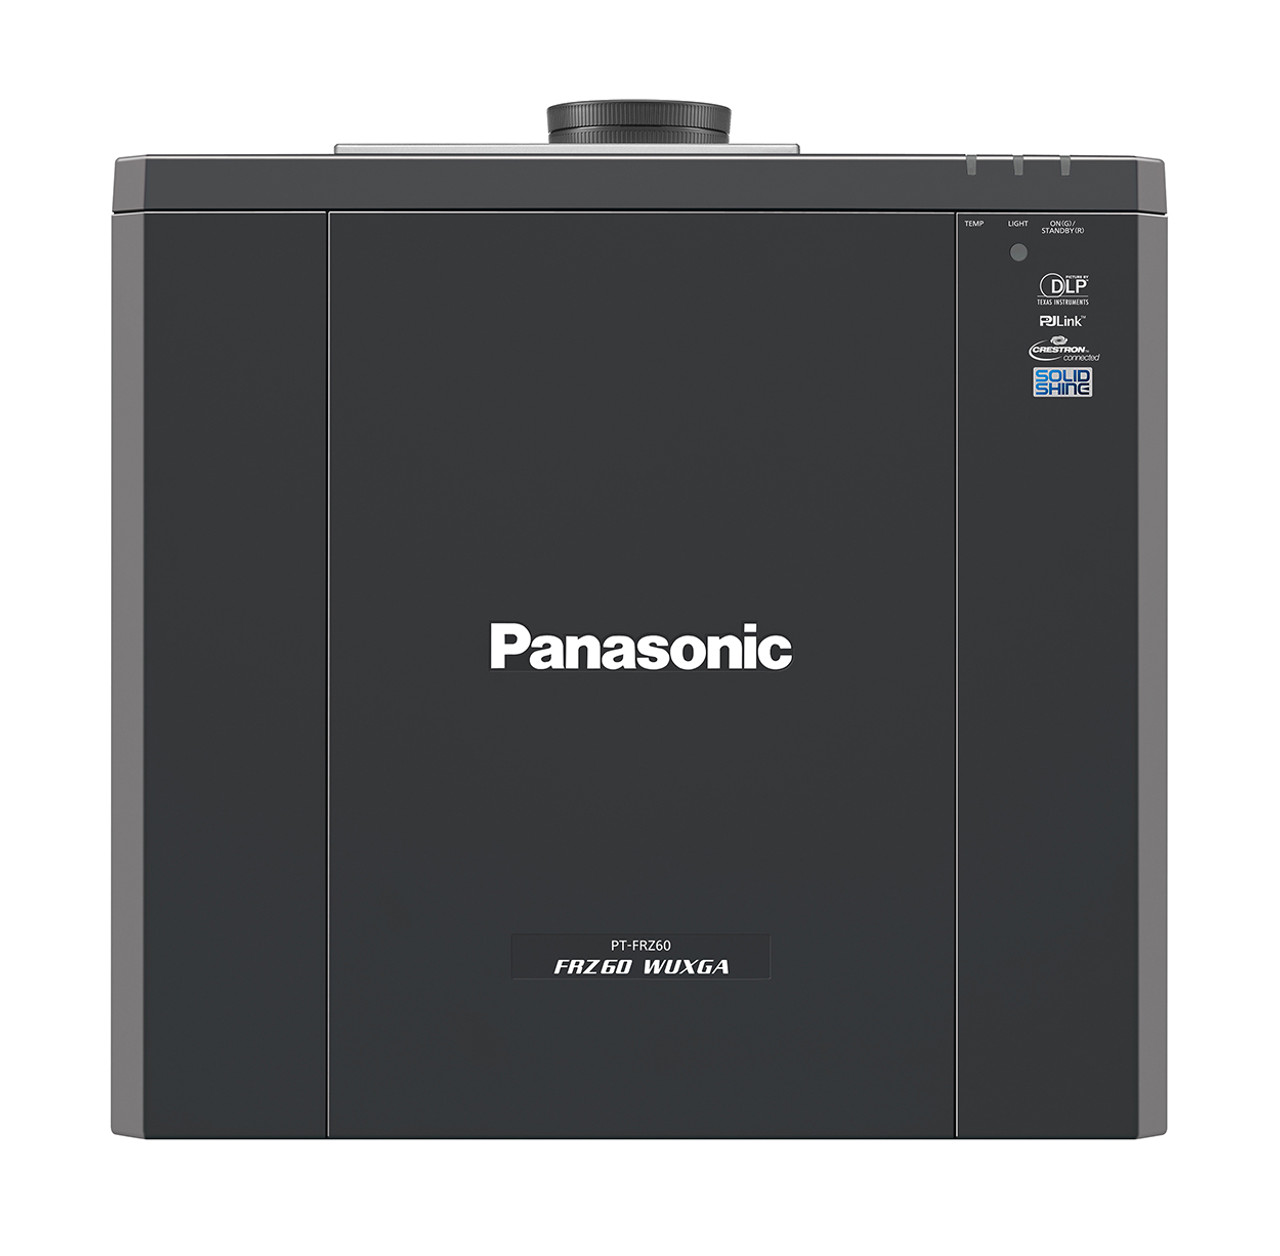 Panasonic PT-FRZ60 WUXGA 6000 Lumens 24/7 Digital Link 1-Chip DLP Laser Projector